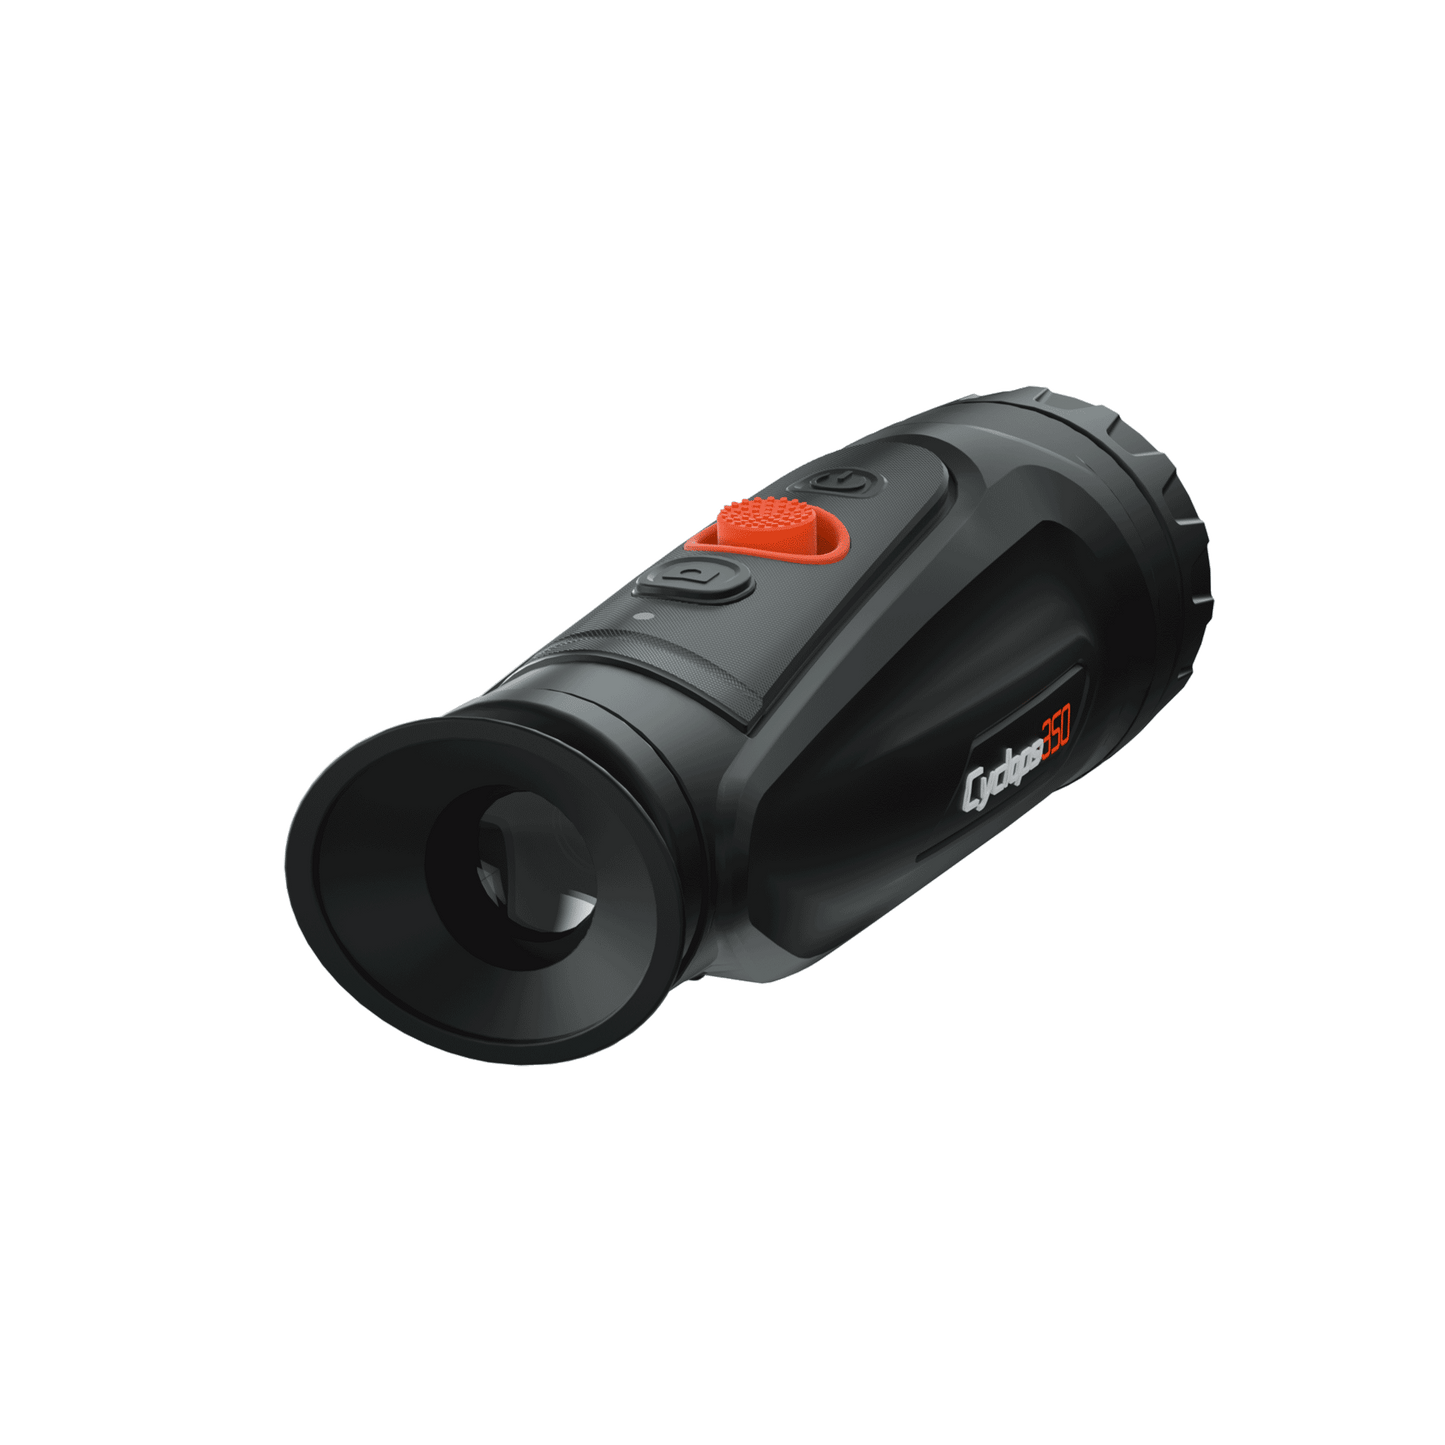 Cyclops 350 termisk spotter med optager